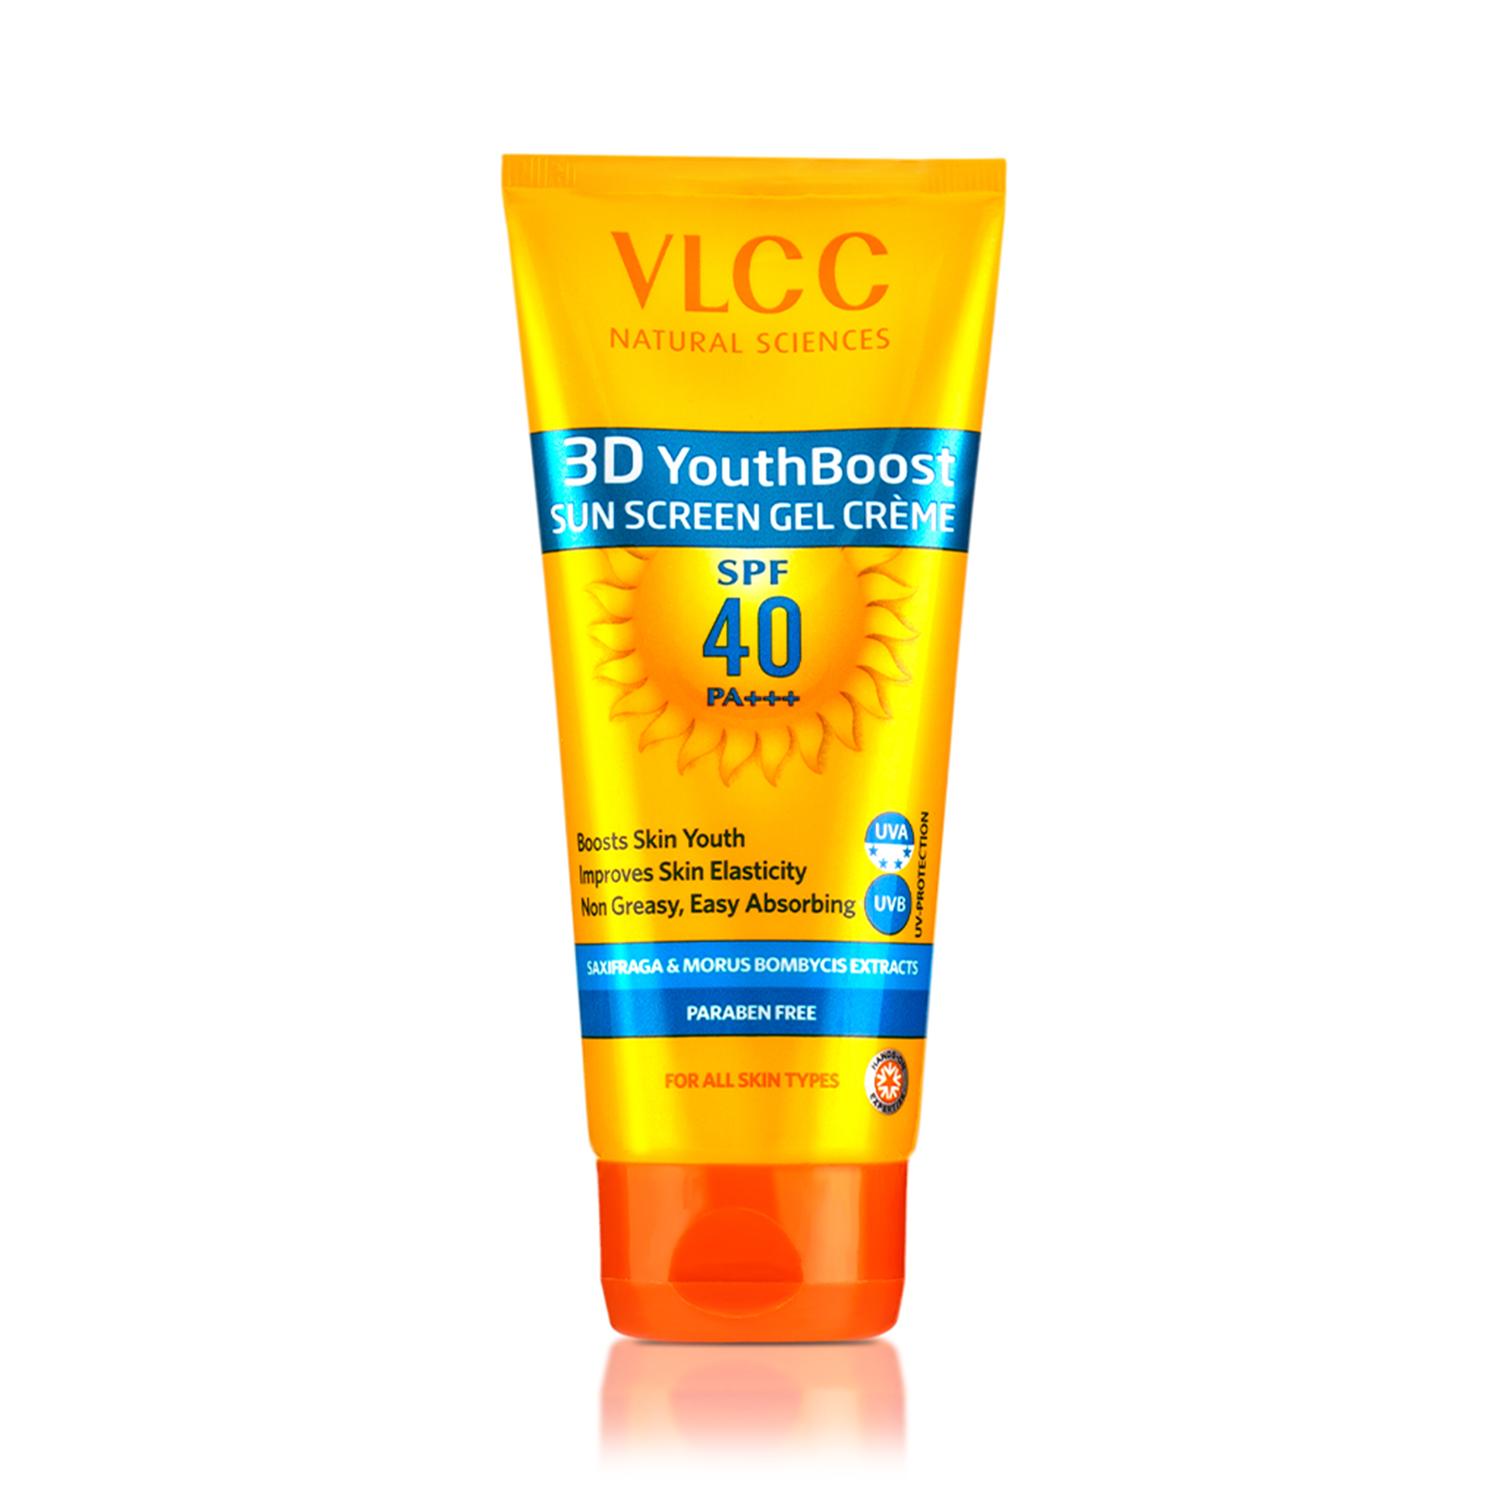 VLCC Youth Boost Sun Screen Gel Creme SPF 40 (100g)